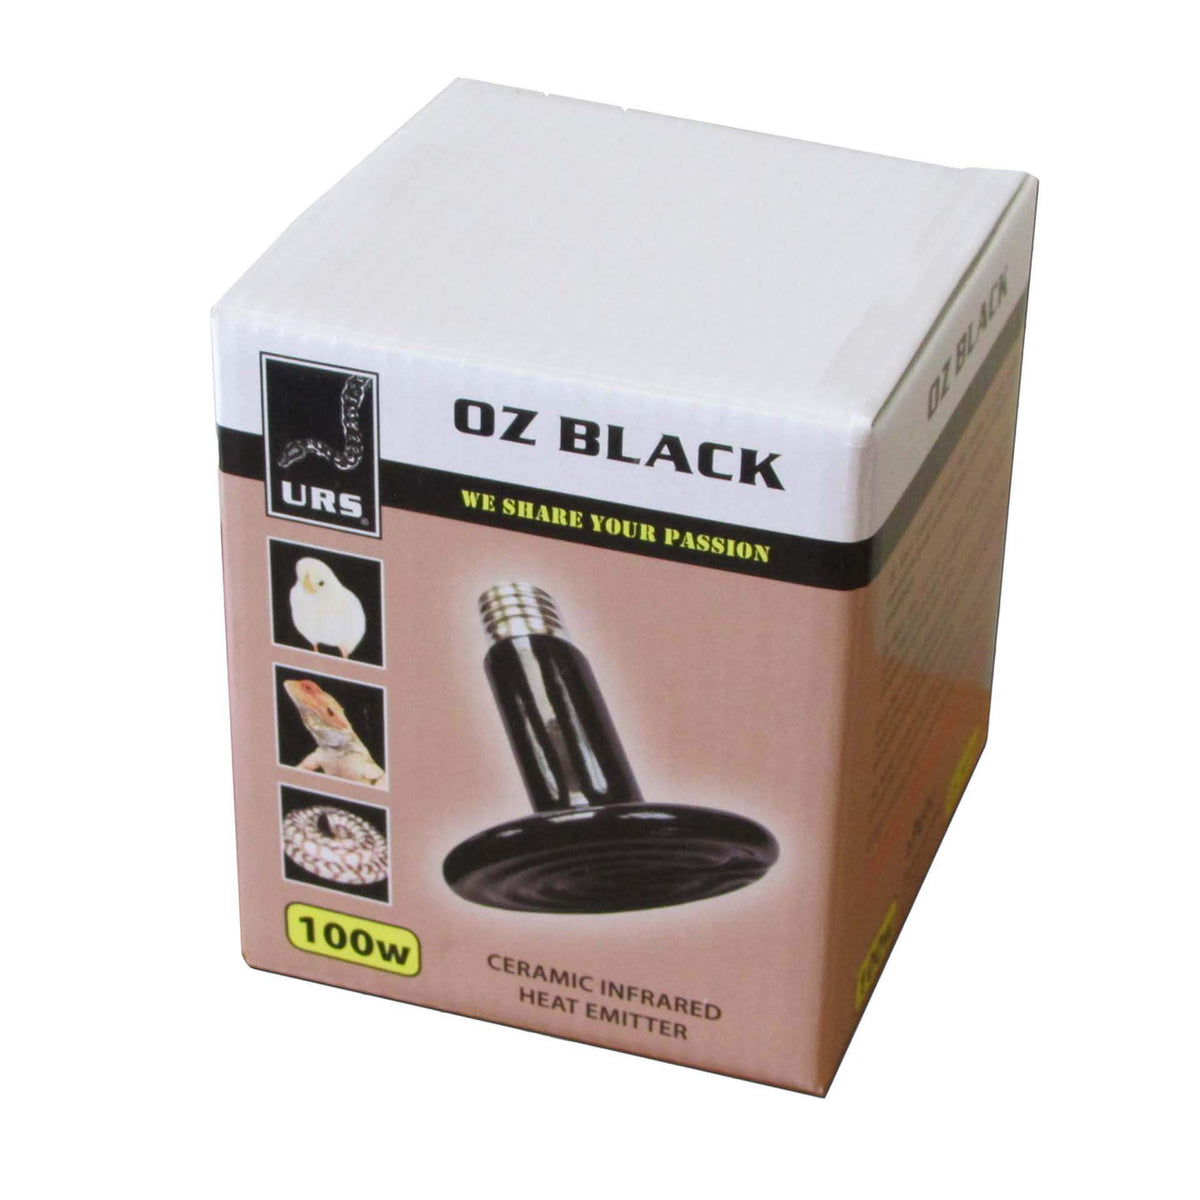 URS Oz Black Ceramic 100w